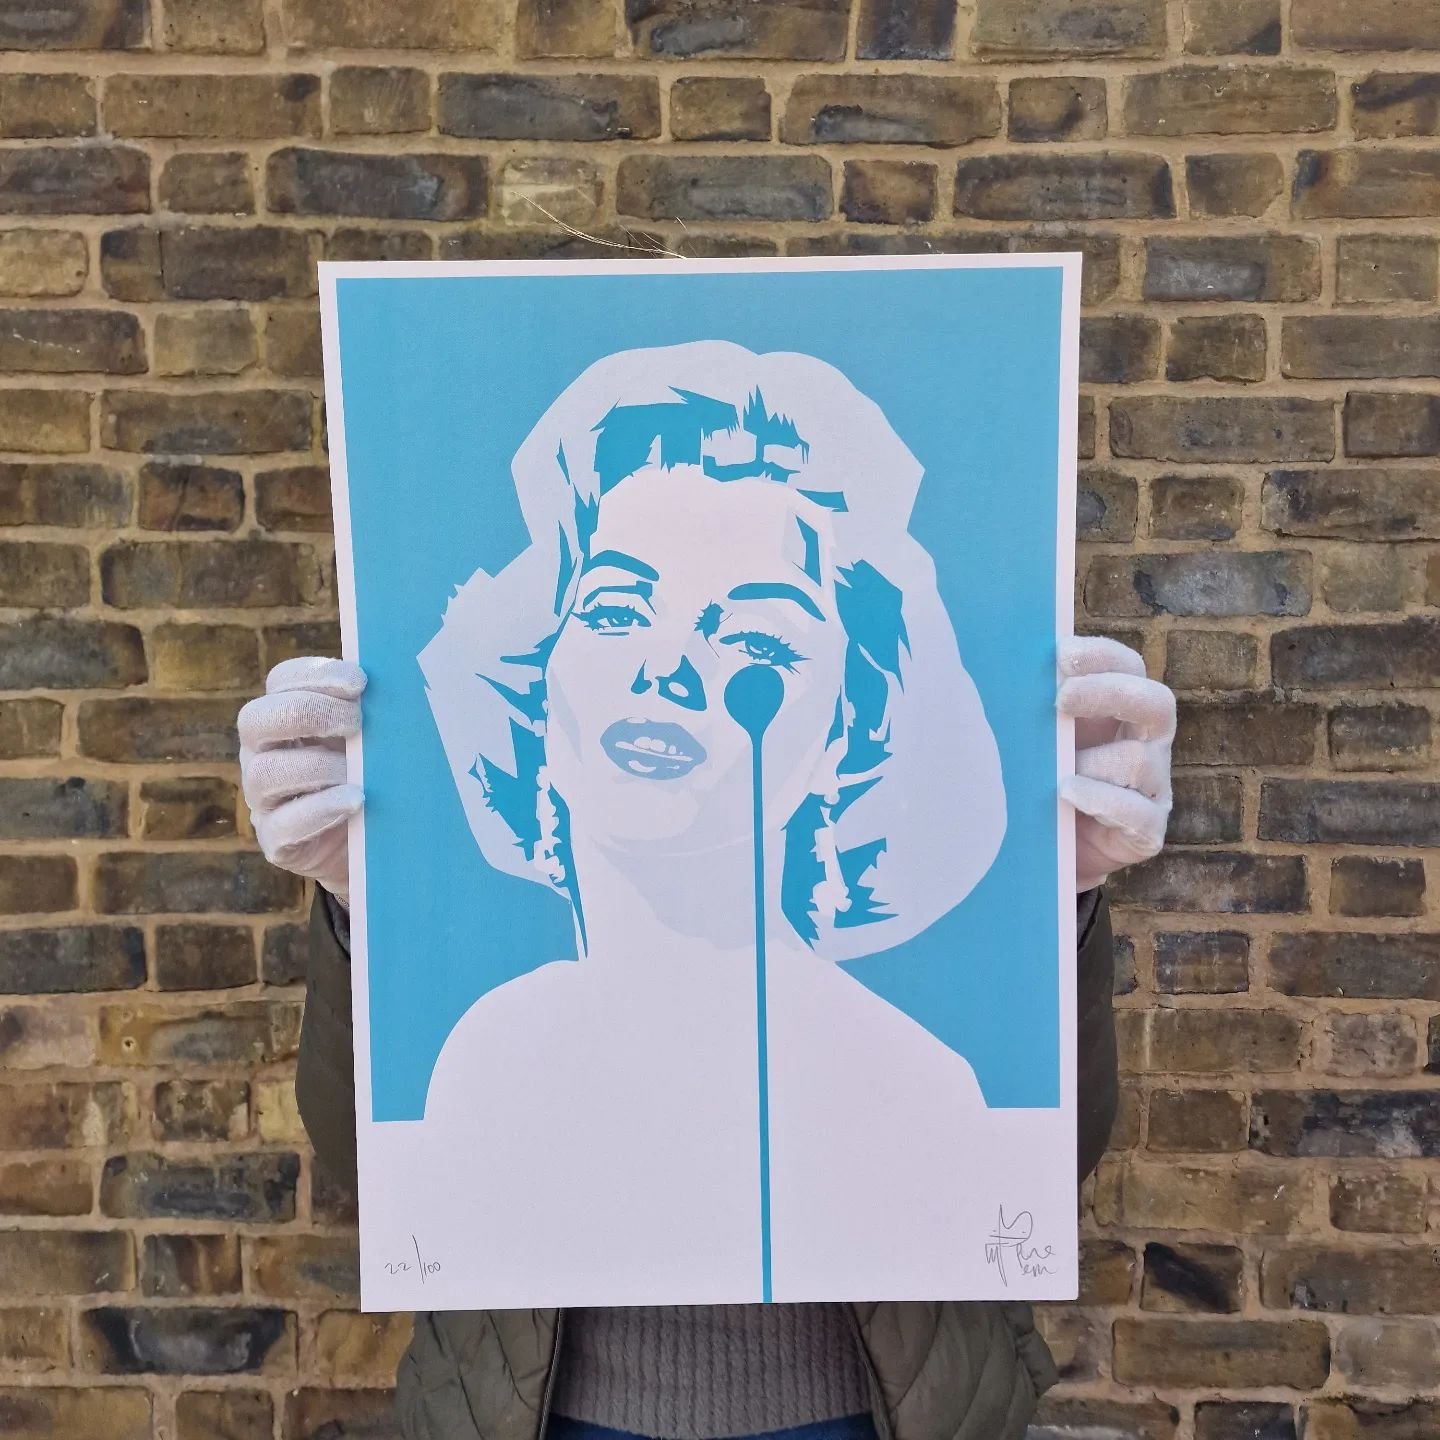 @xennial_gallery 

&quot;Marilyn&quot; 

Edition number 22/100, by artist @pureevilgallery 

Print paper size 350 x 500mm.

#xennialgallery #bexleyvillage #londongallery #artcollection #limitededitionprints #artcollector #artoninstagram #art #frameda